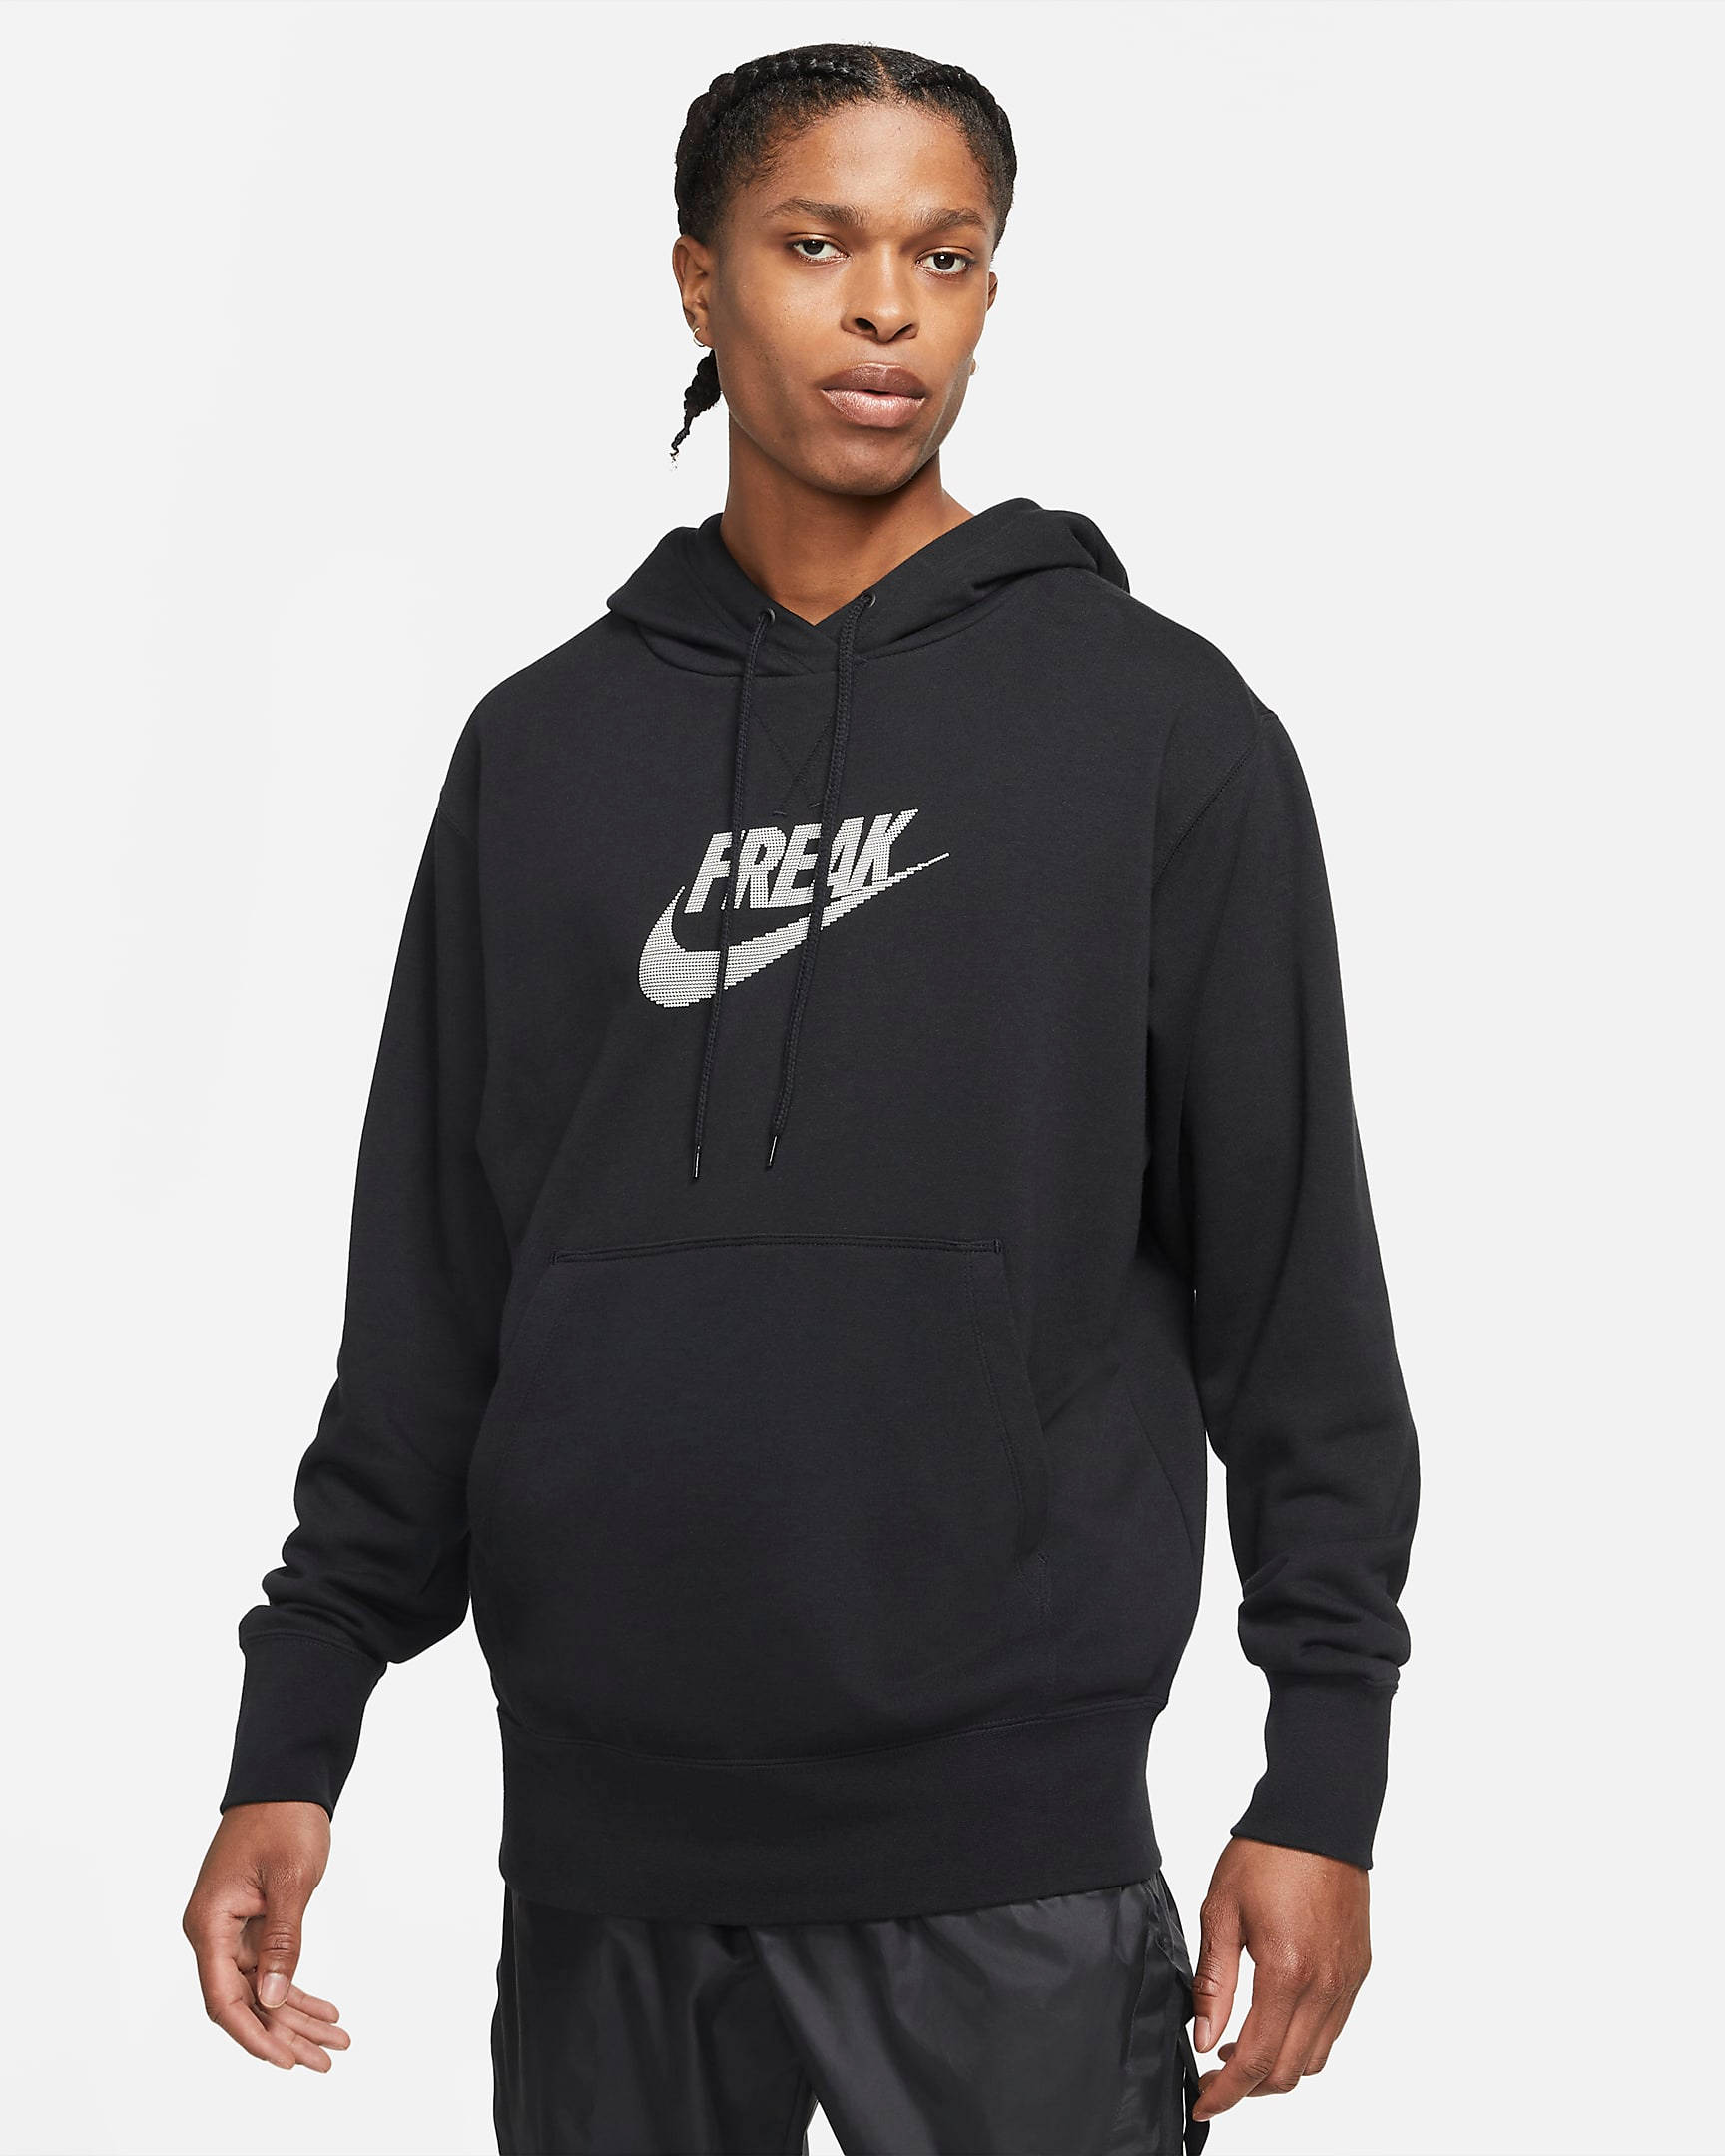 Nike Giannis Freak Pullover Hoodie - Black | The Sole Supplier